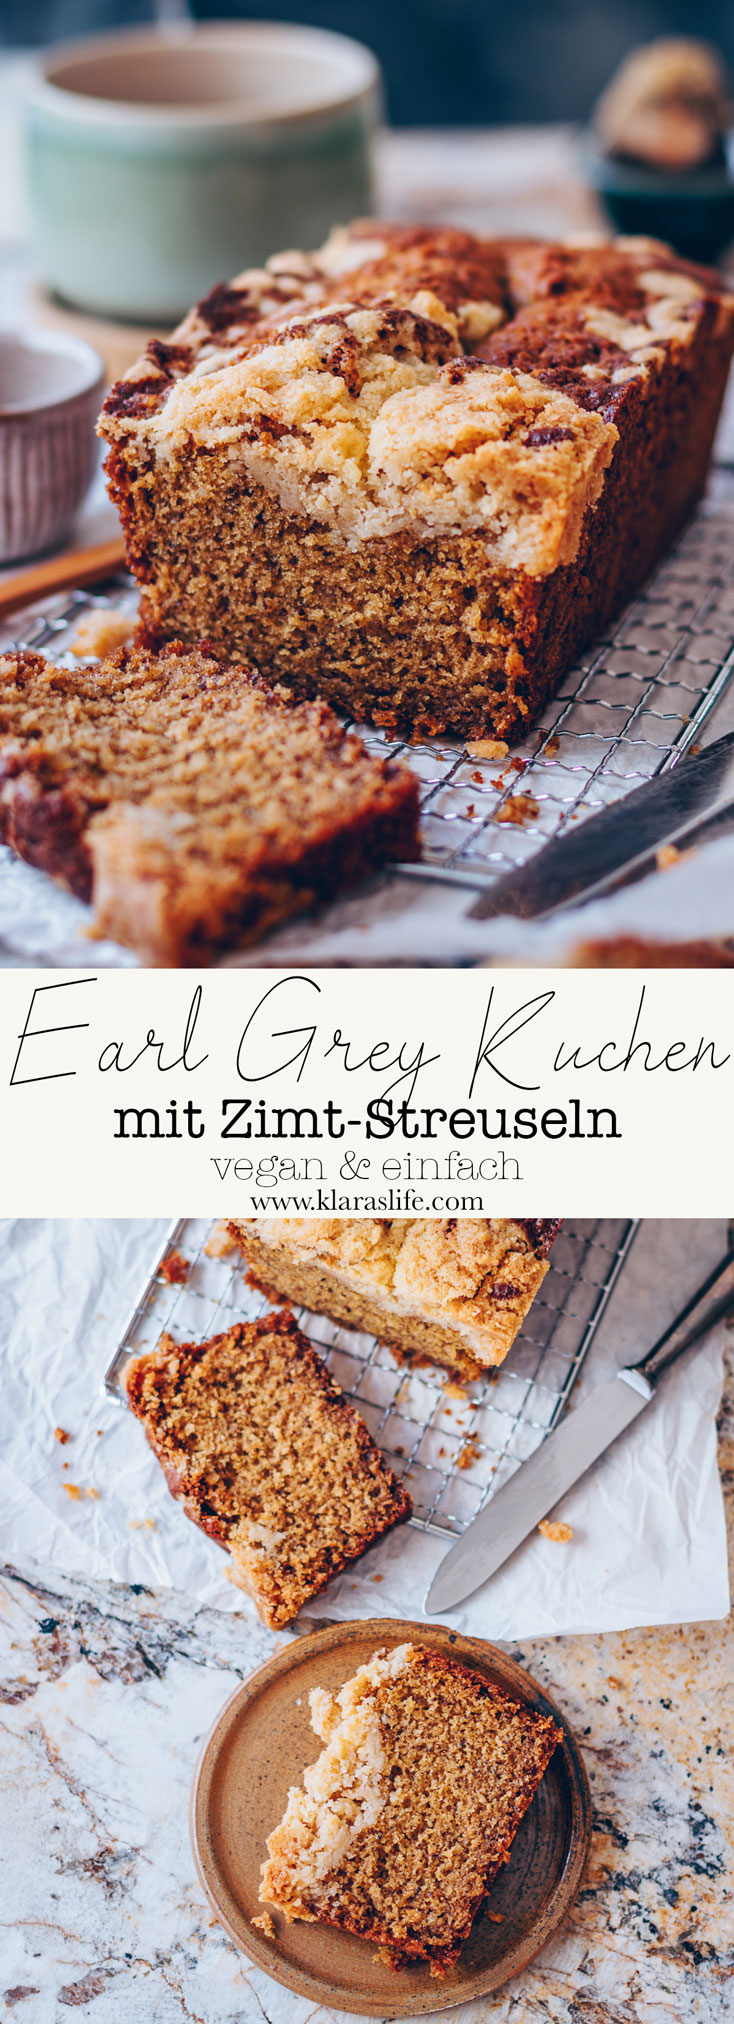 Earl Grey Kuchen mit Zimt-Streuseln